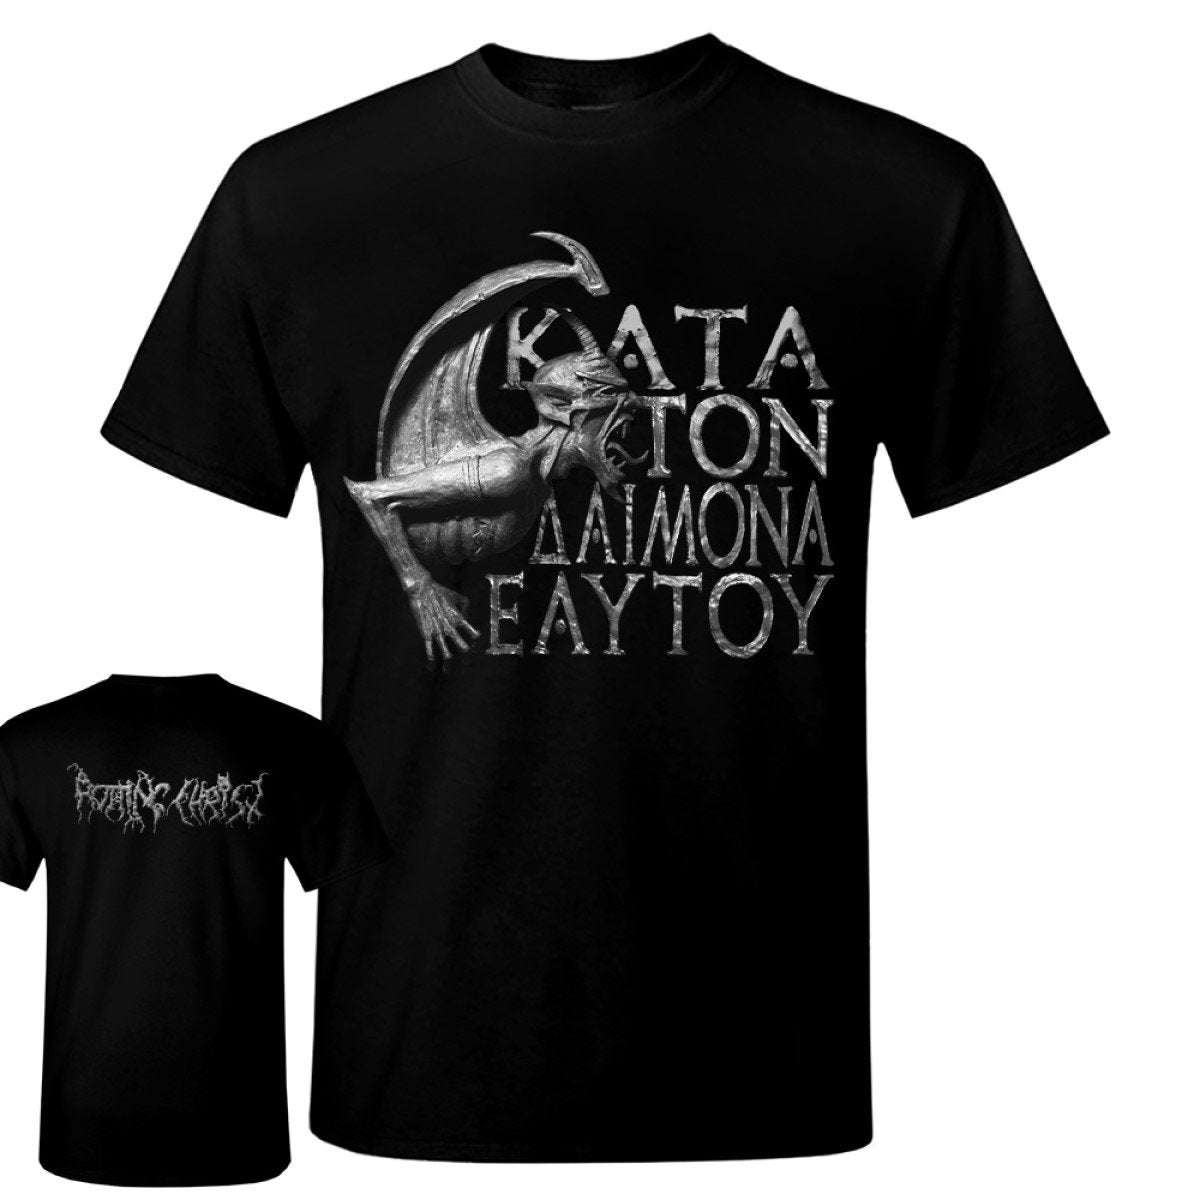 Rotting Christ "Kata Ton Daimona Eaytoy Cover" T shirt